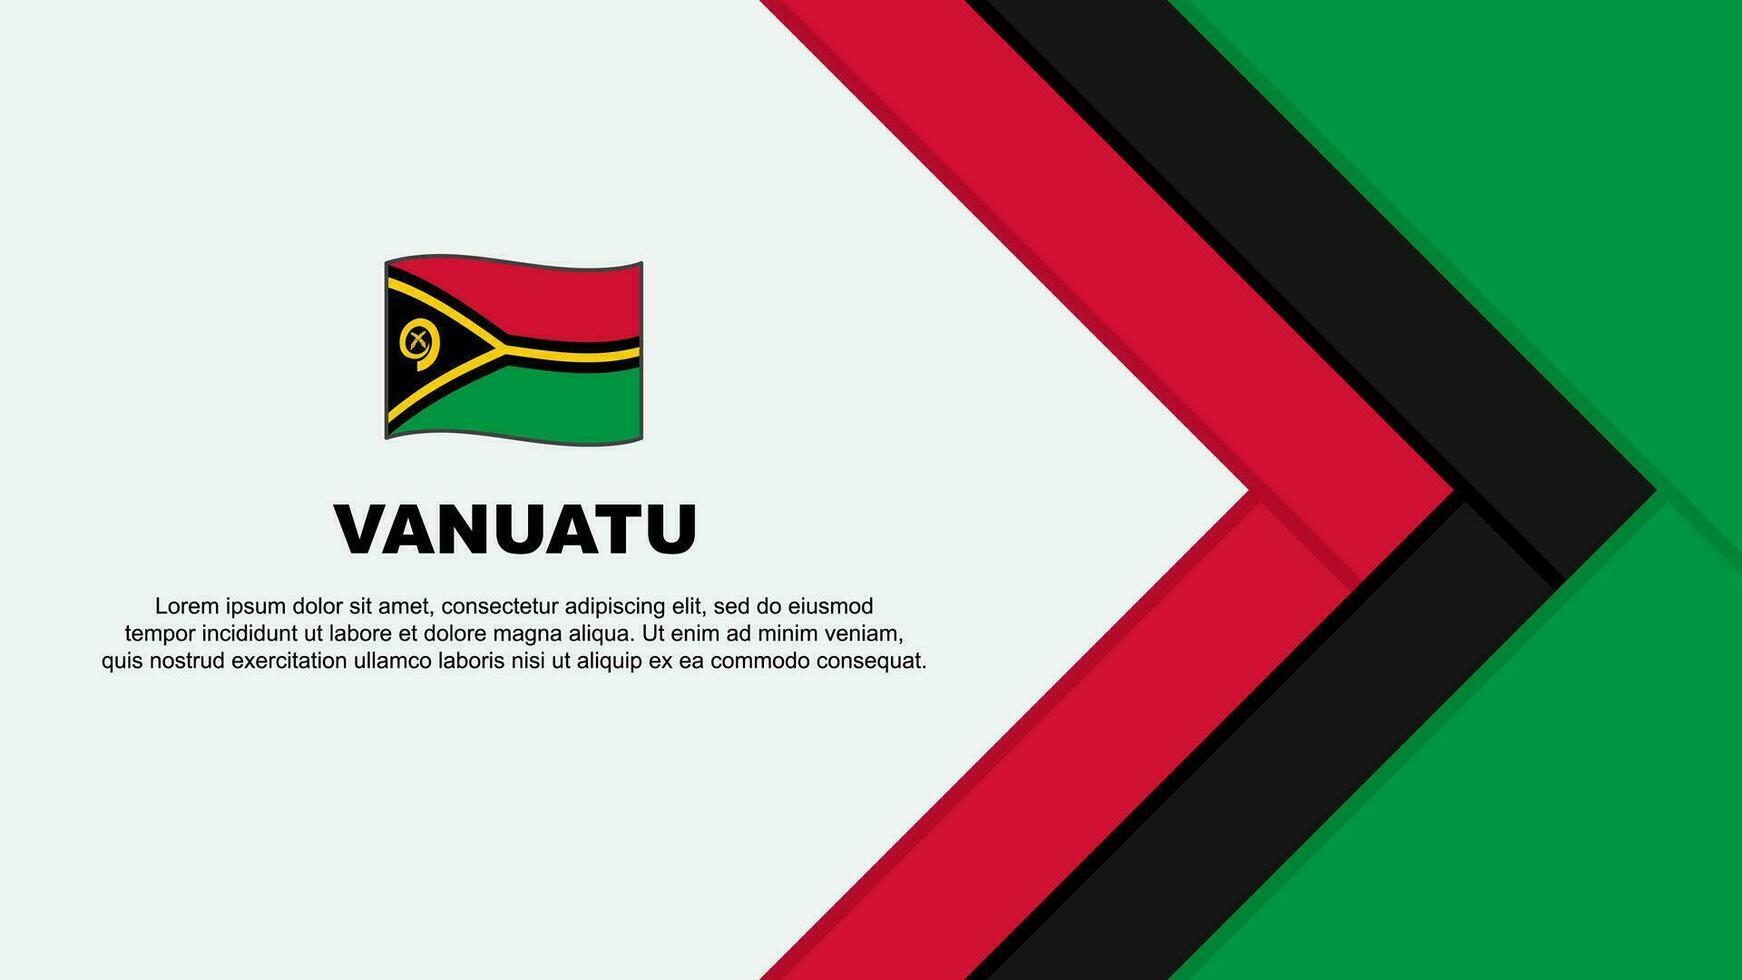 Vanuatu Flag Abstract Background Design Template. Vanuatu Independence Day Banner Cartoon Vector Illustration. Vanuatu Cartoon